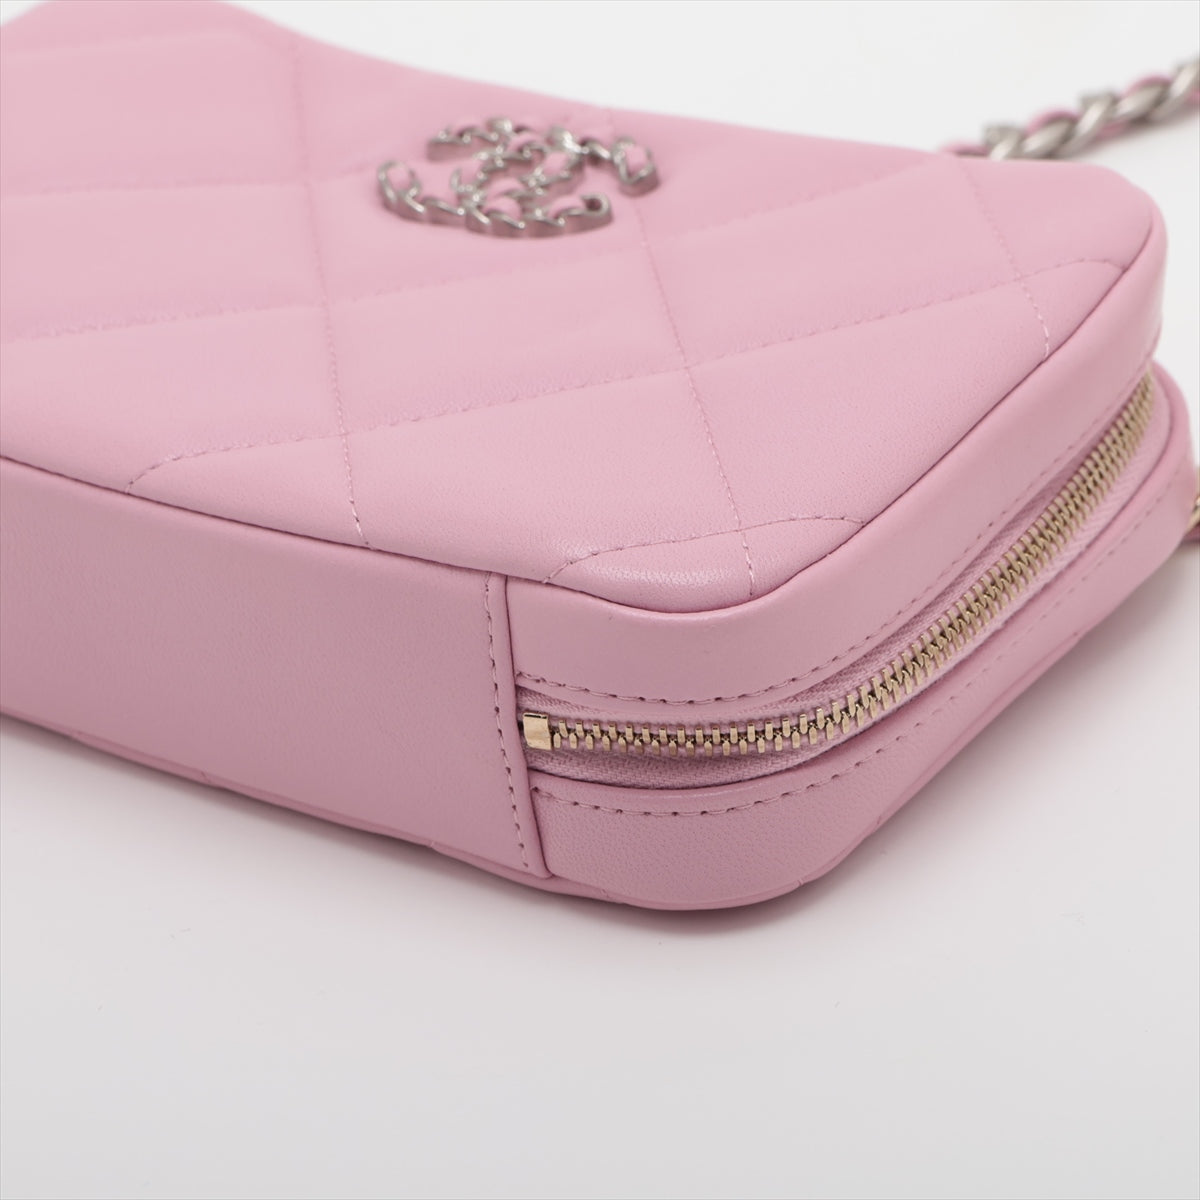 Chanel 19  Chain Shoulder Bag Pink G x Silver Gold AP2728